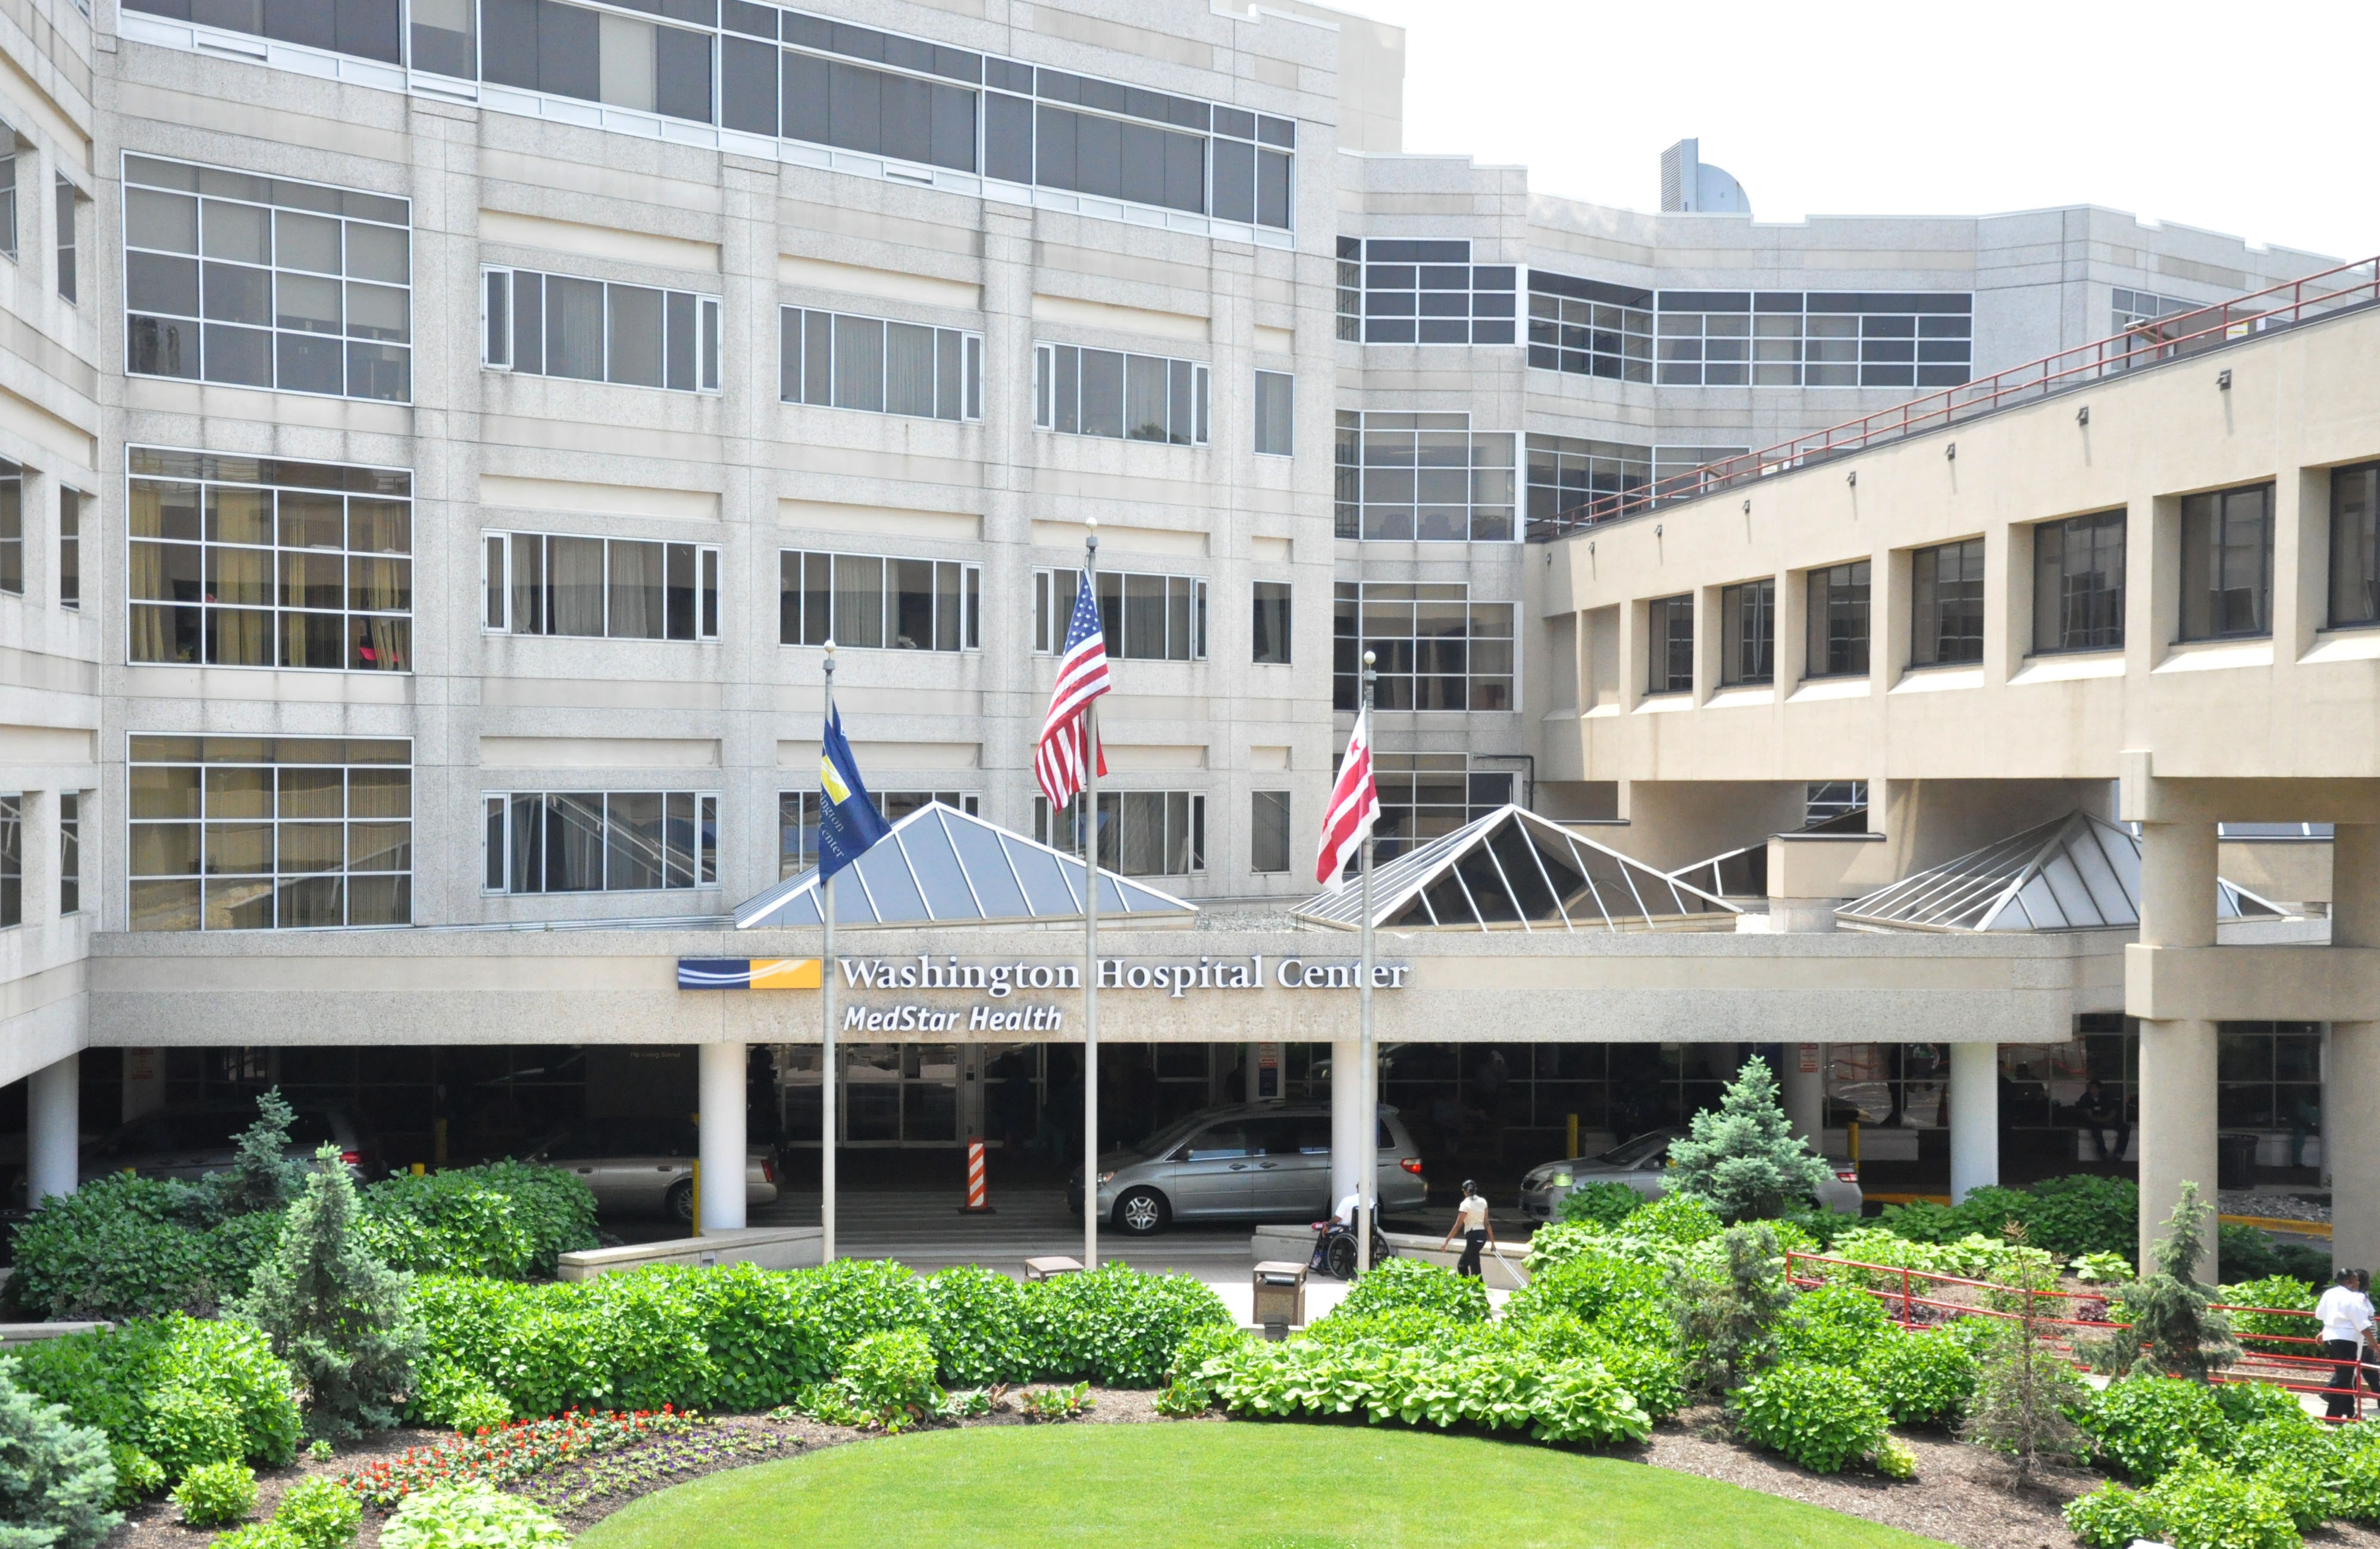 MedStar Washington Hospital Center - Wikipedia